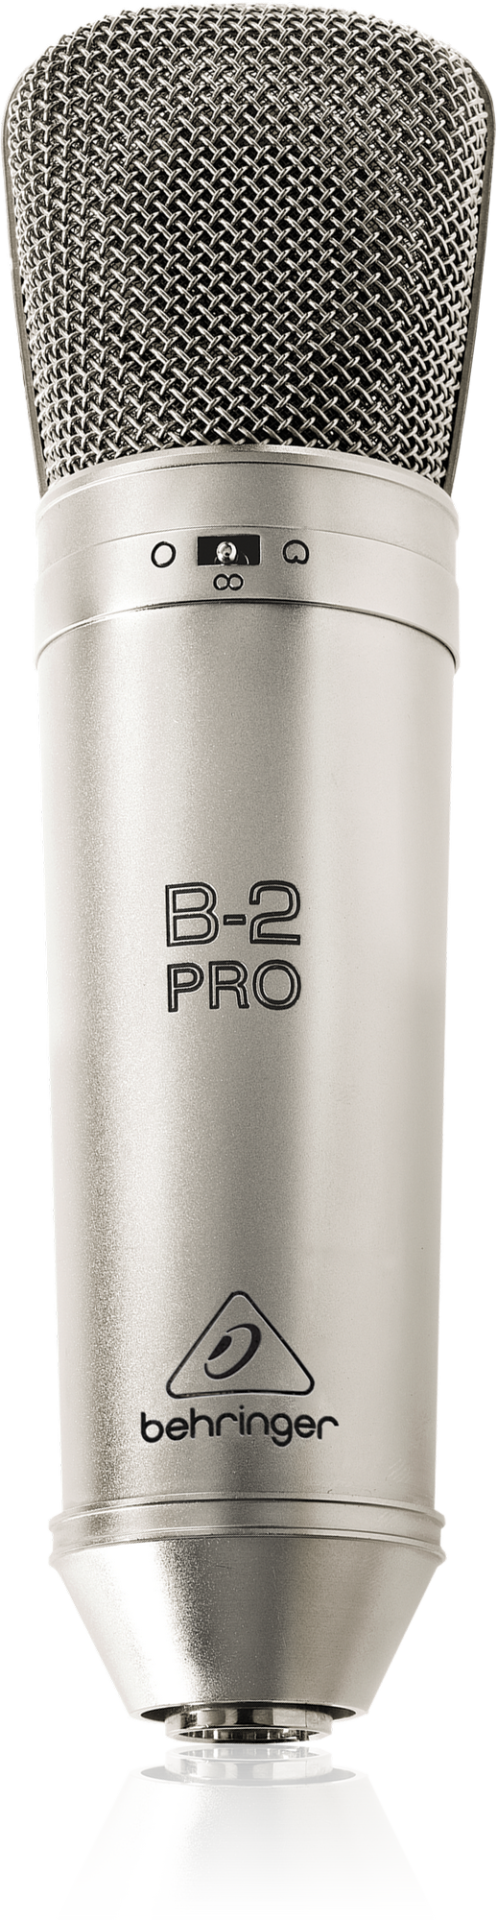 BEHRINGER B-2 PRO Çift Diyaframlı Condenser Stüdyo Kayıt Mikrofonu